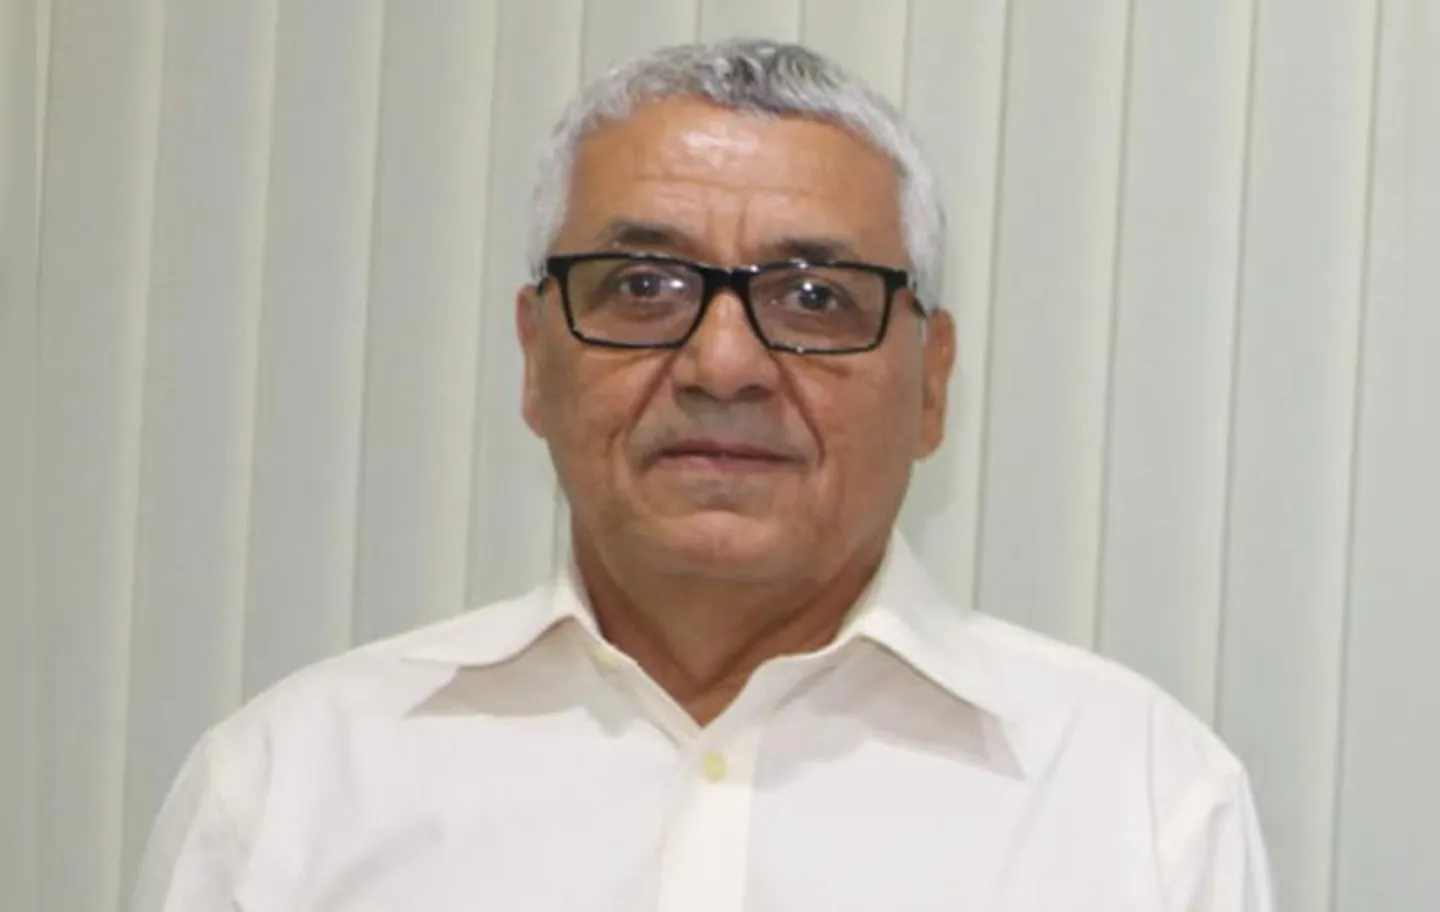 De acordo com denúncia feita por vereador, prefeito Valtécio Neves, "incorre" na suposta prática de grave ato de improbidade administrativa